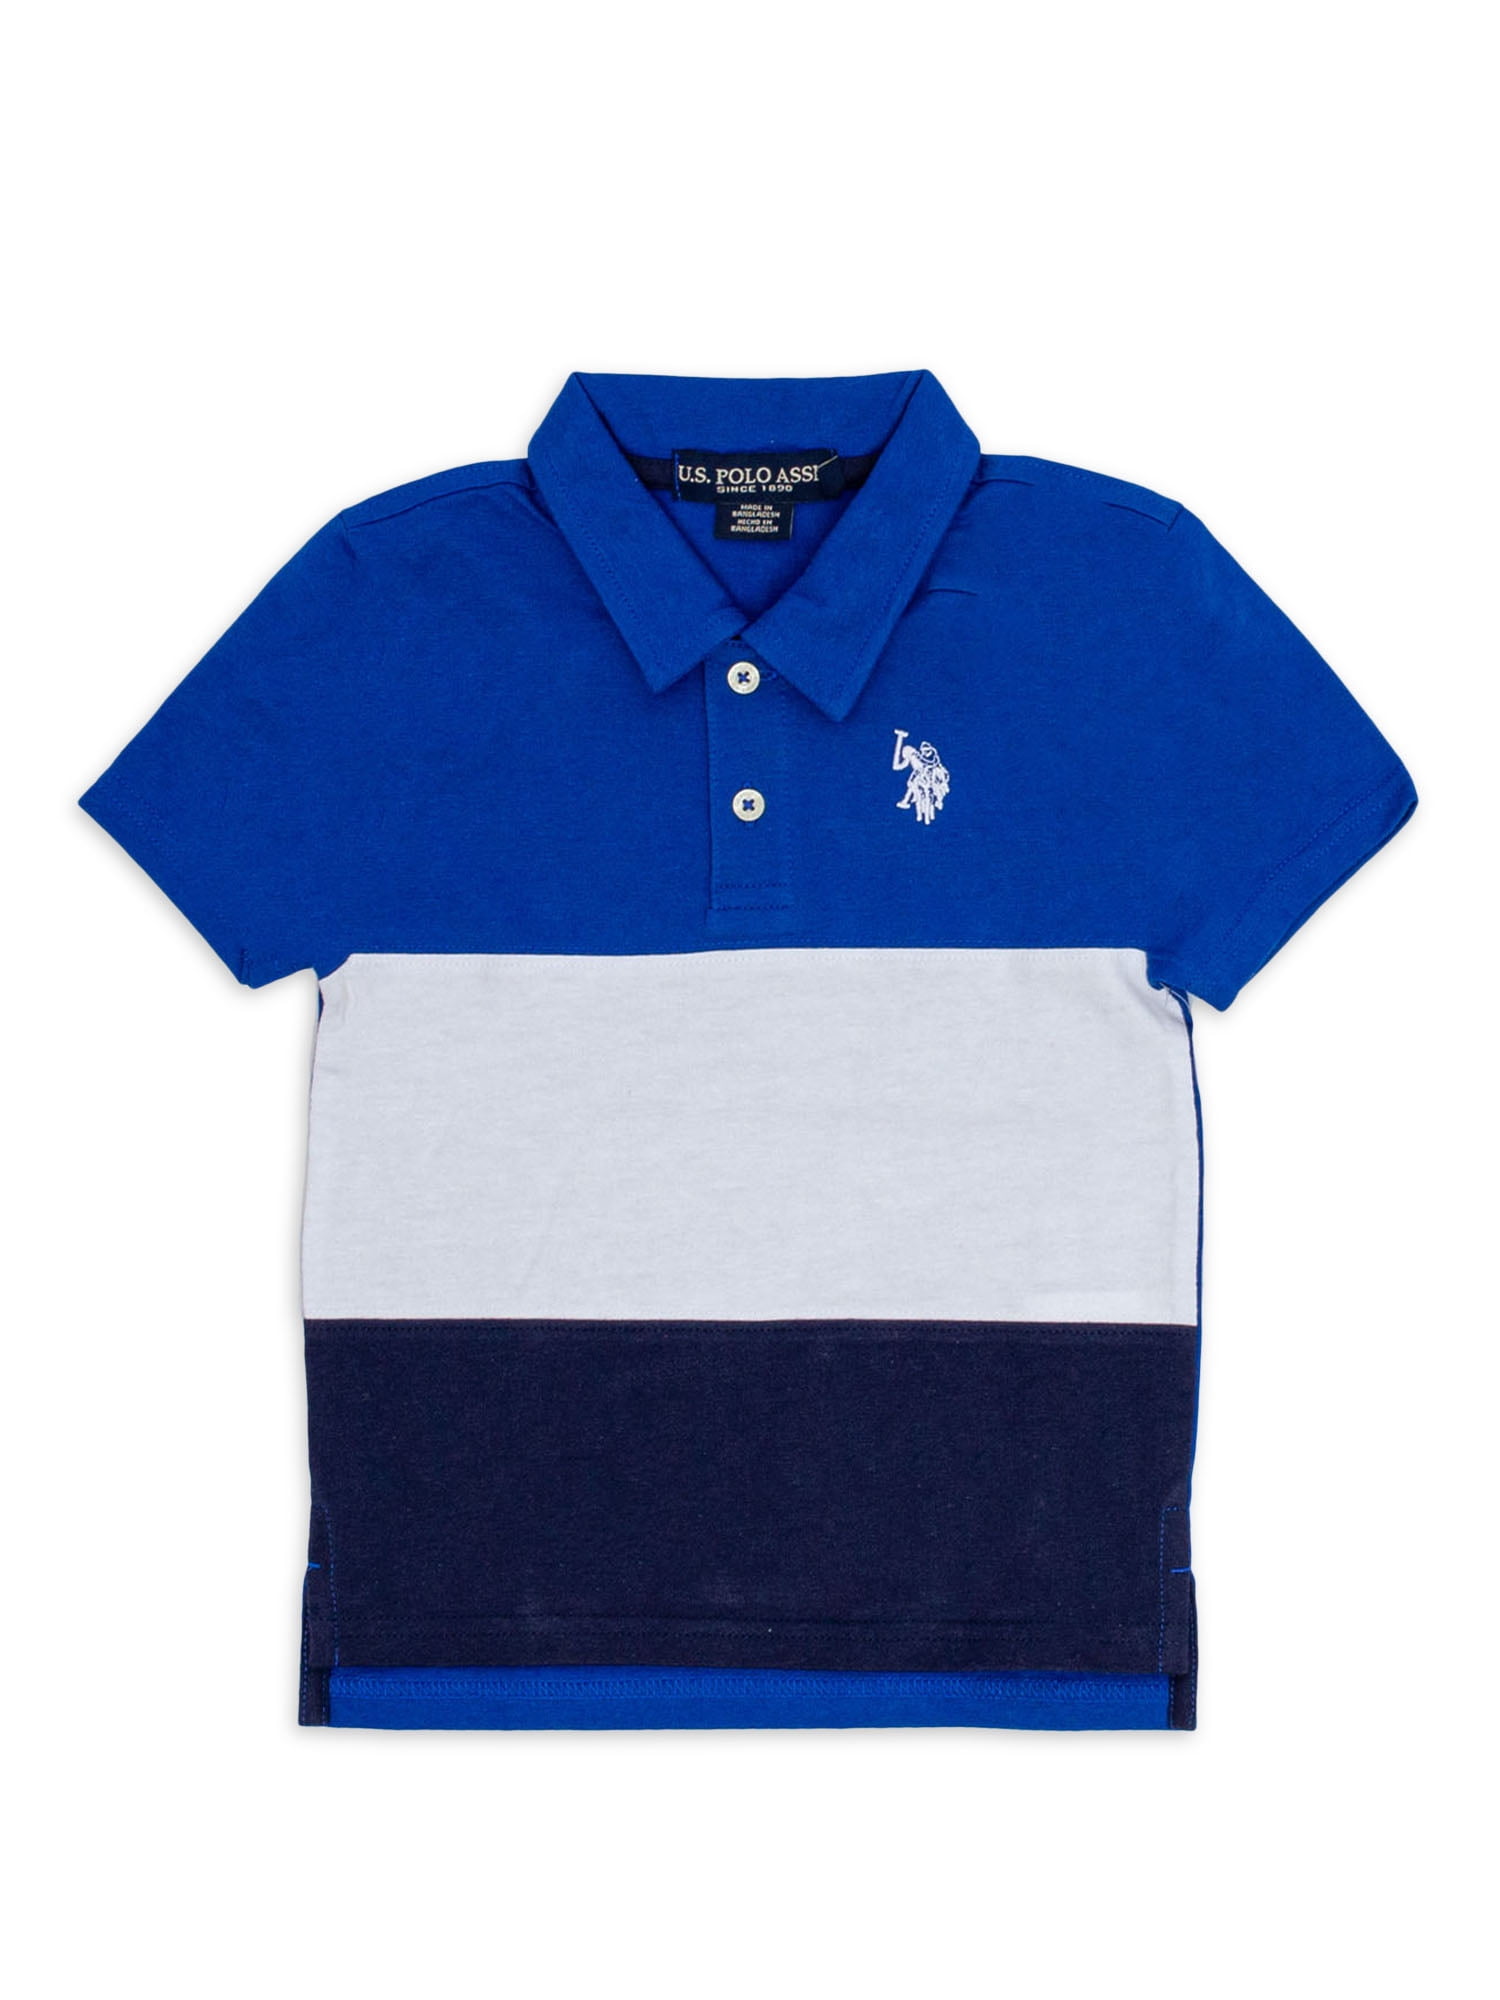 Boys Polo Shirt Short Sleeve Summer T-Shirt Stripes Kids Lapel Collar Tops Teenagers School Top Jersey for 7-13 Years 